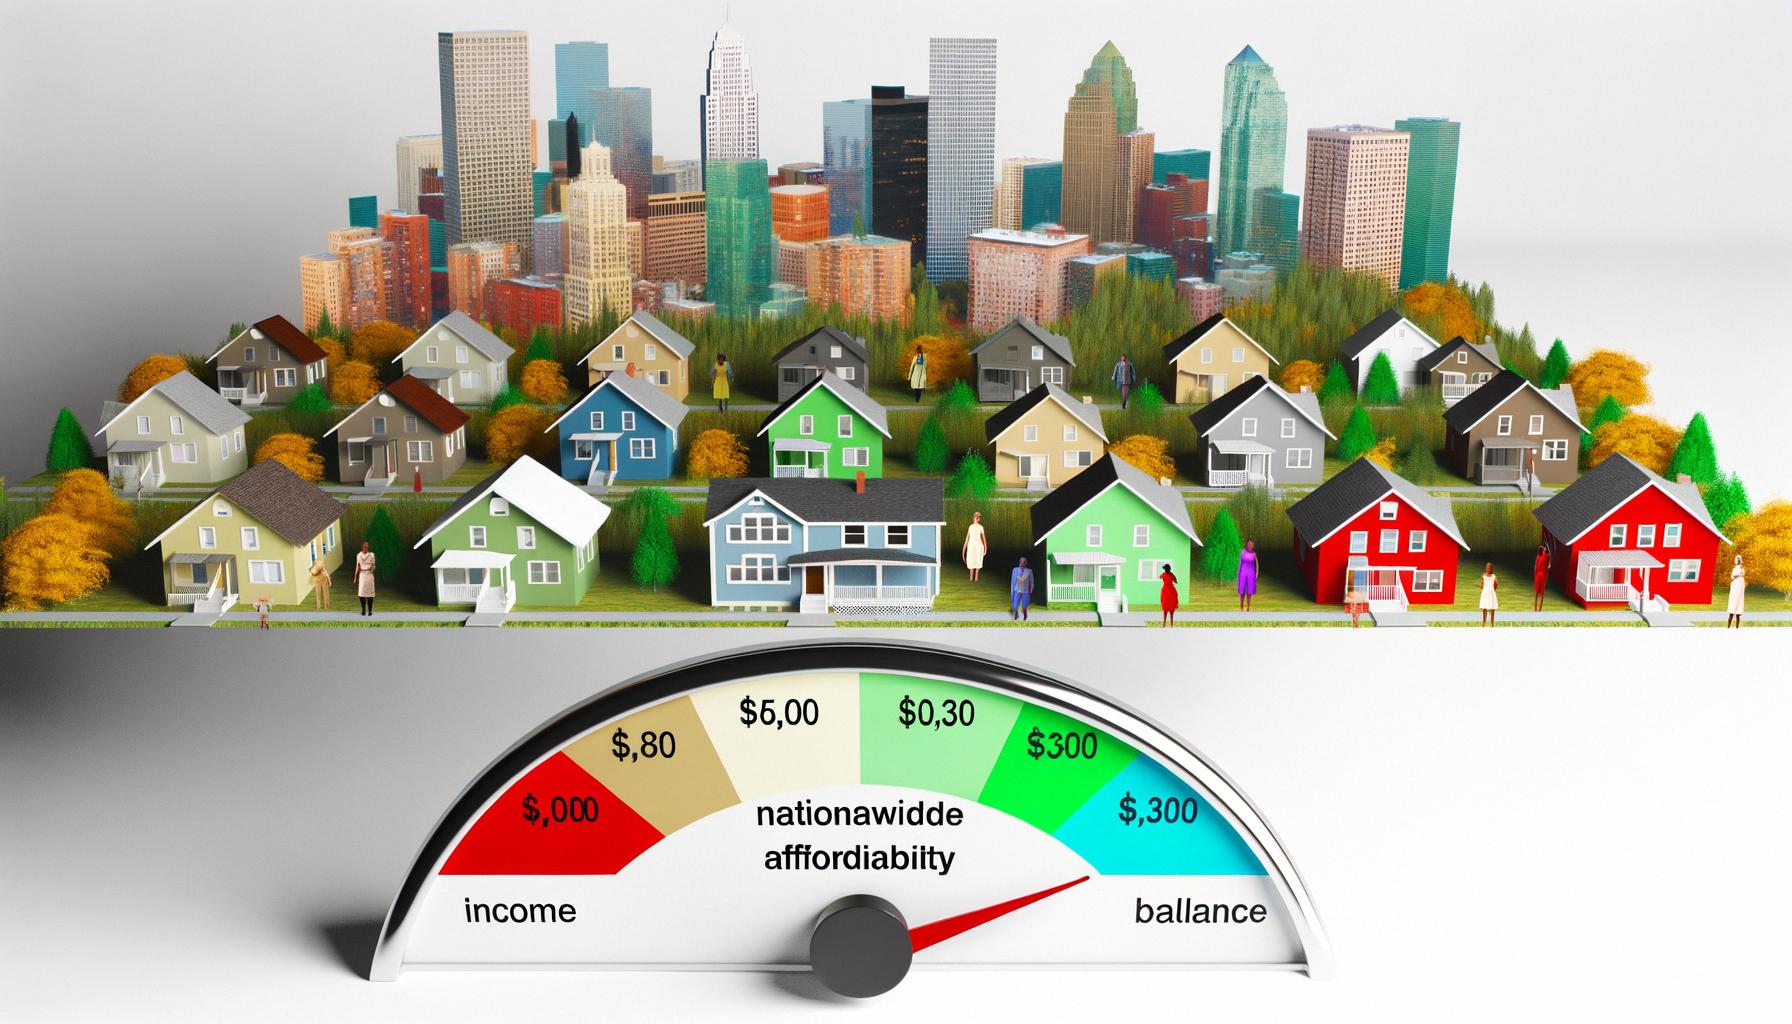 Nationwide housing affordability crisis